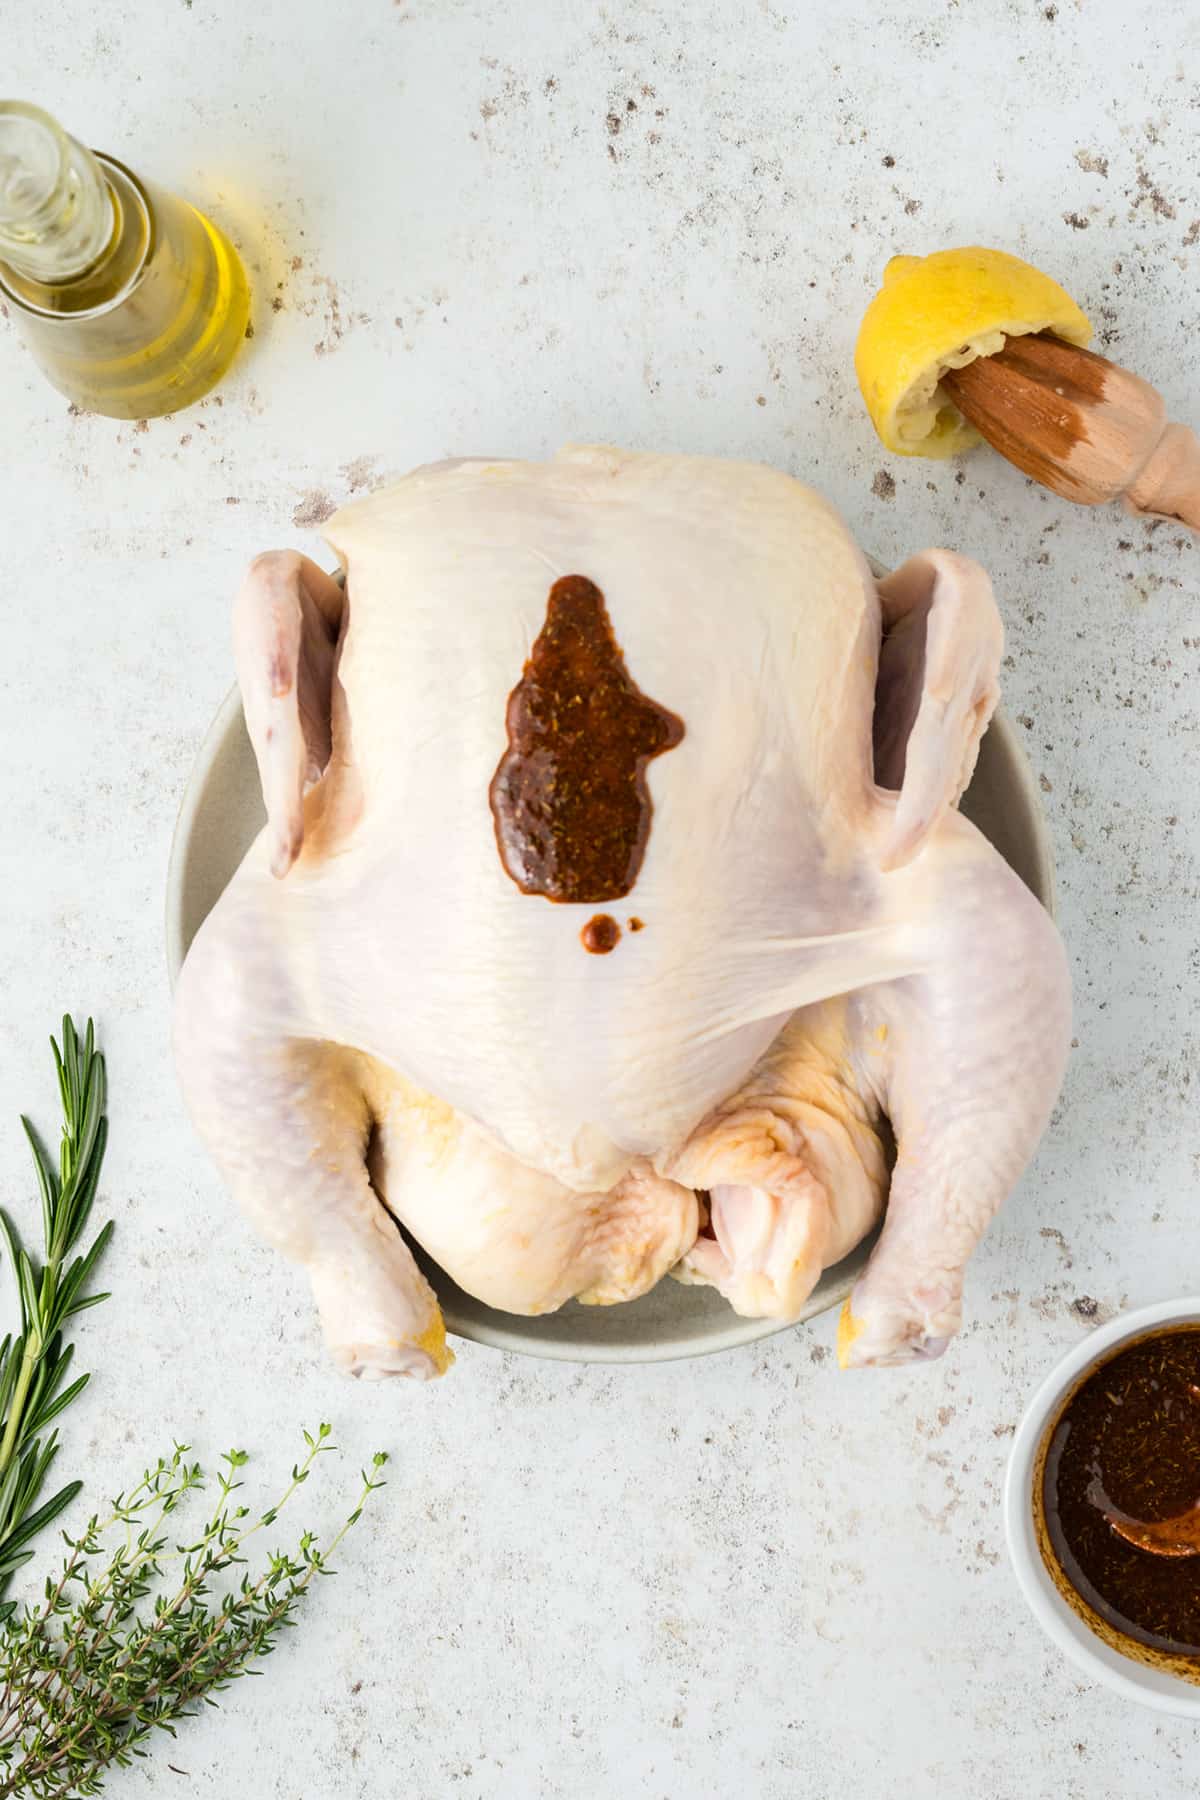 Applying seasoning rub to the chicken.